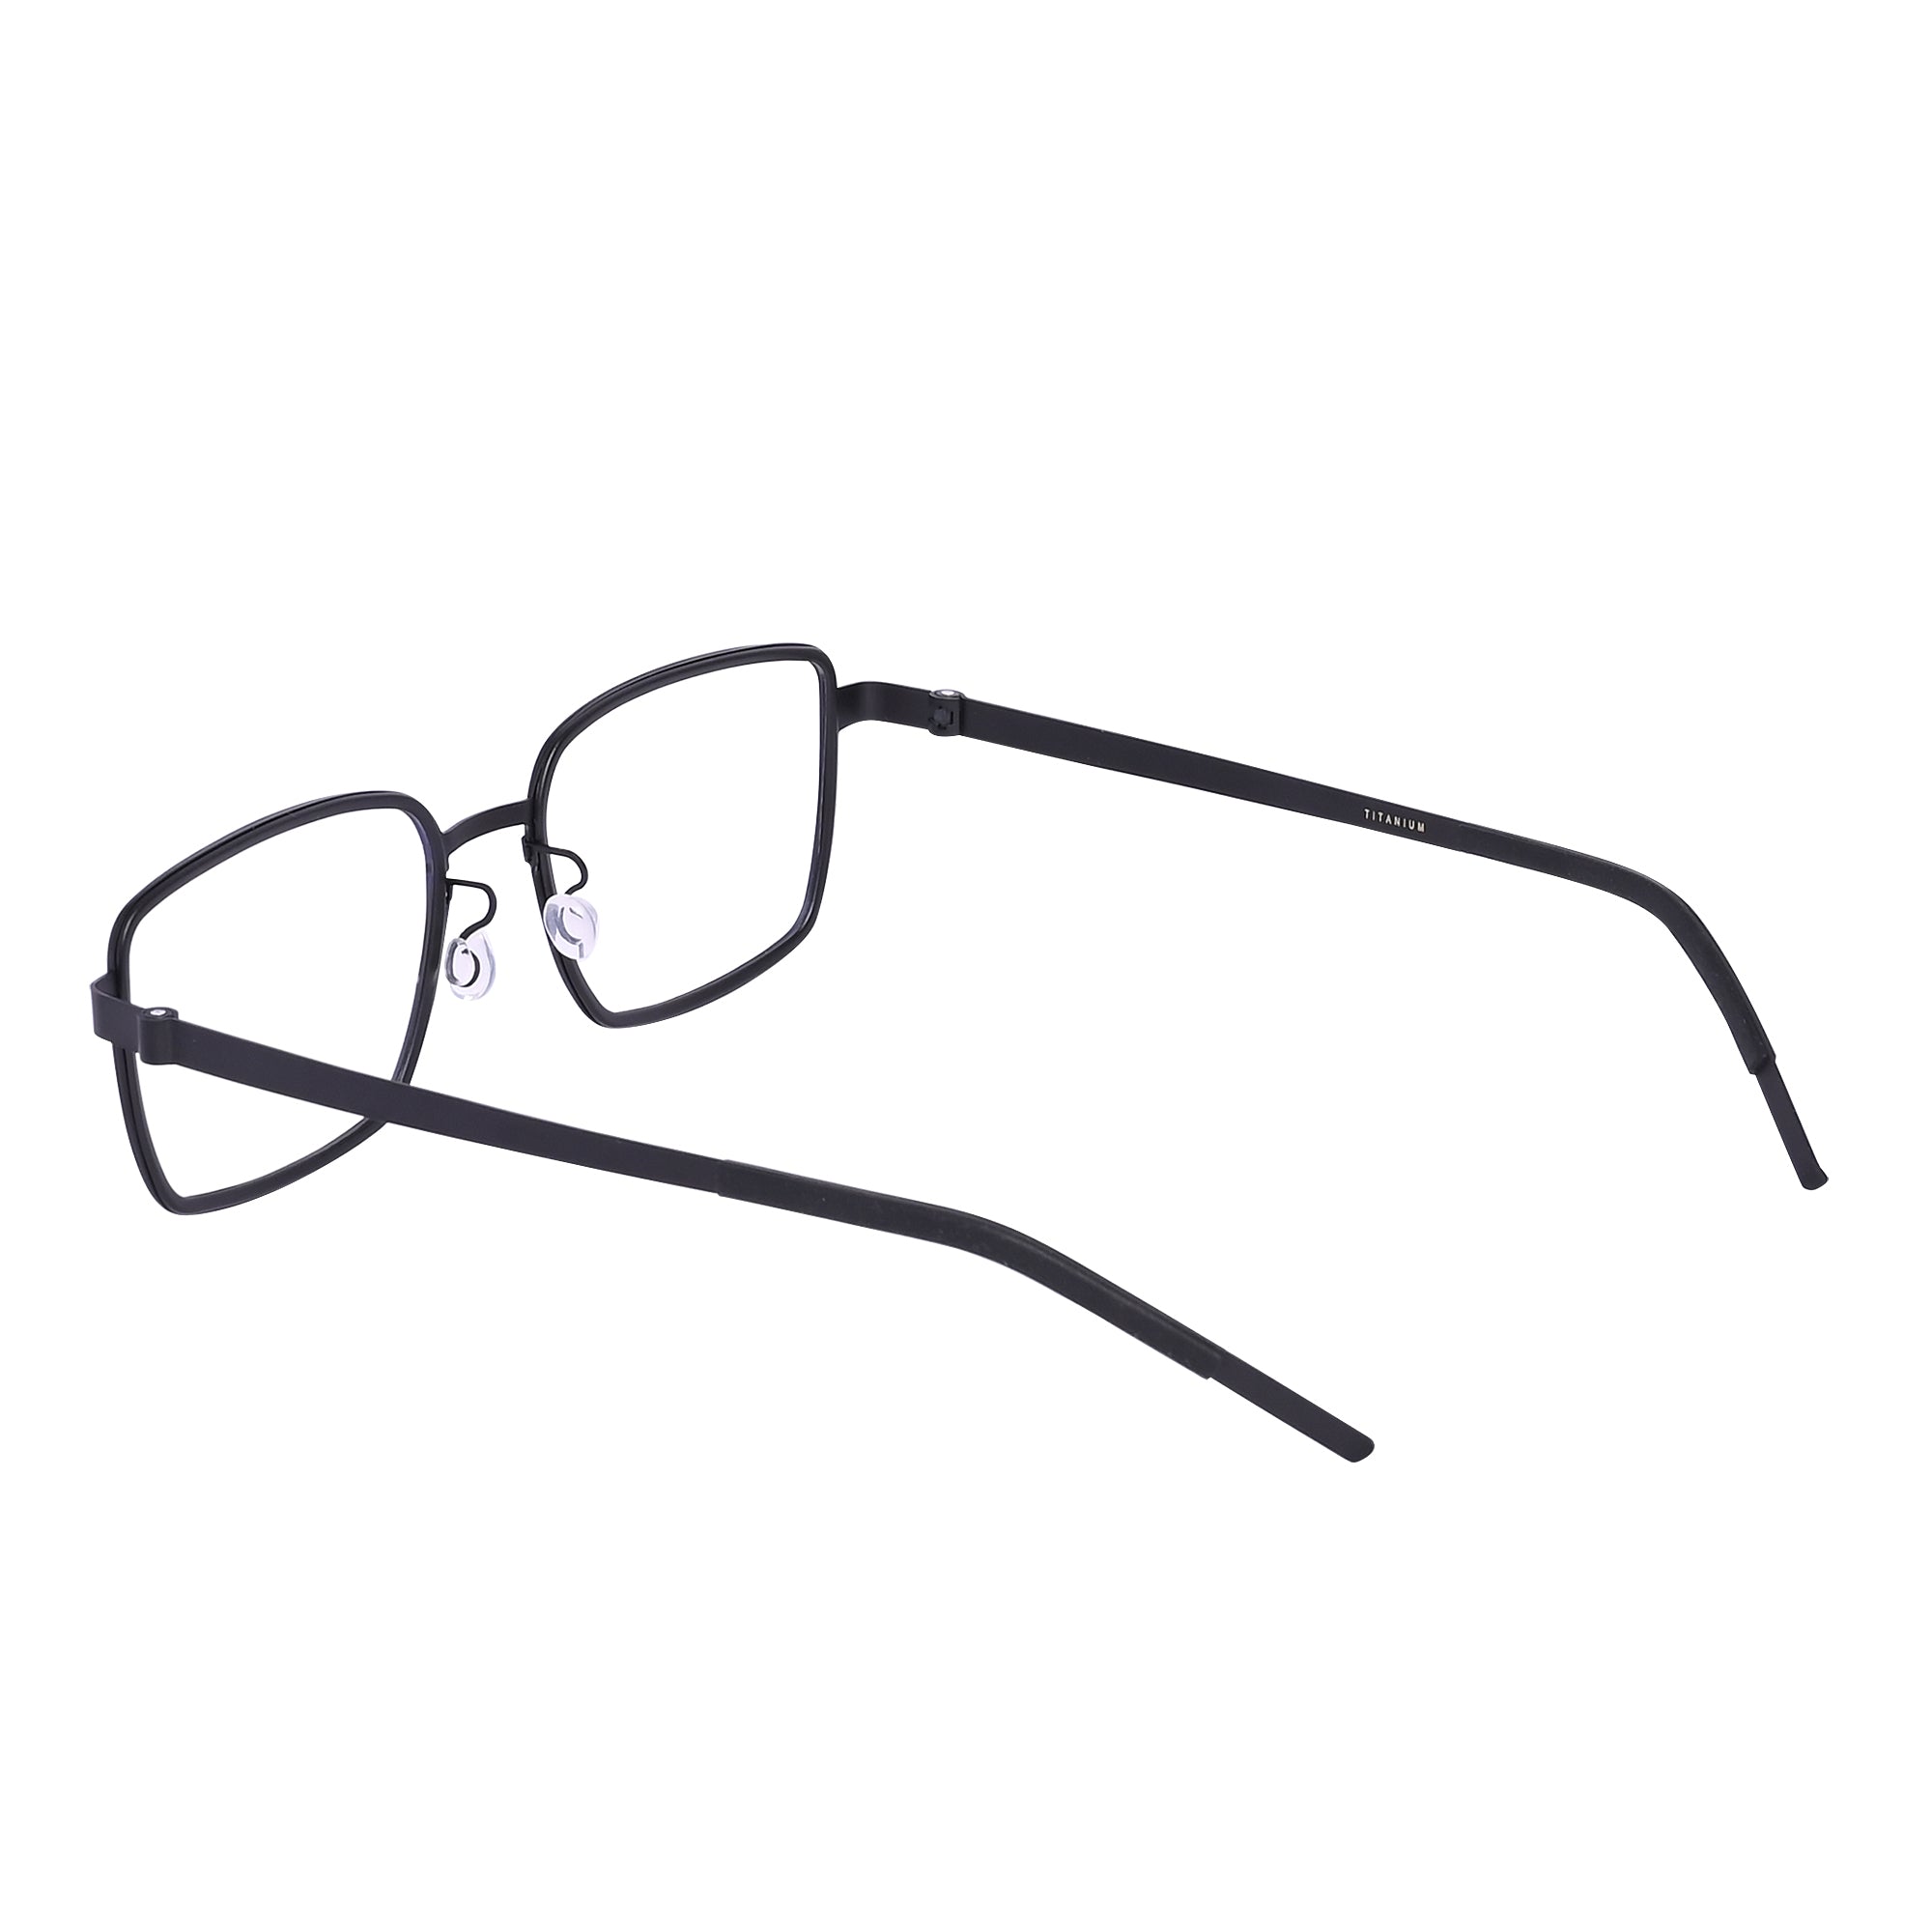 Black Titanium Square Eyeglasses - LG-001 GRBLK